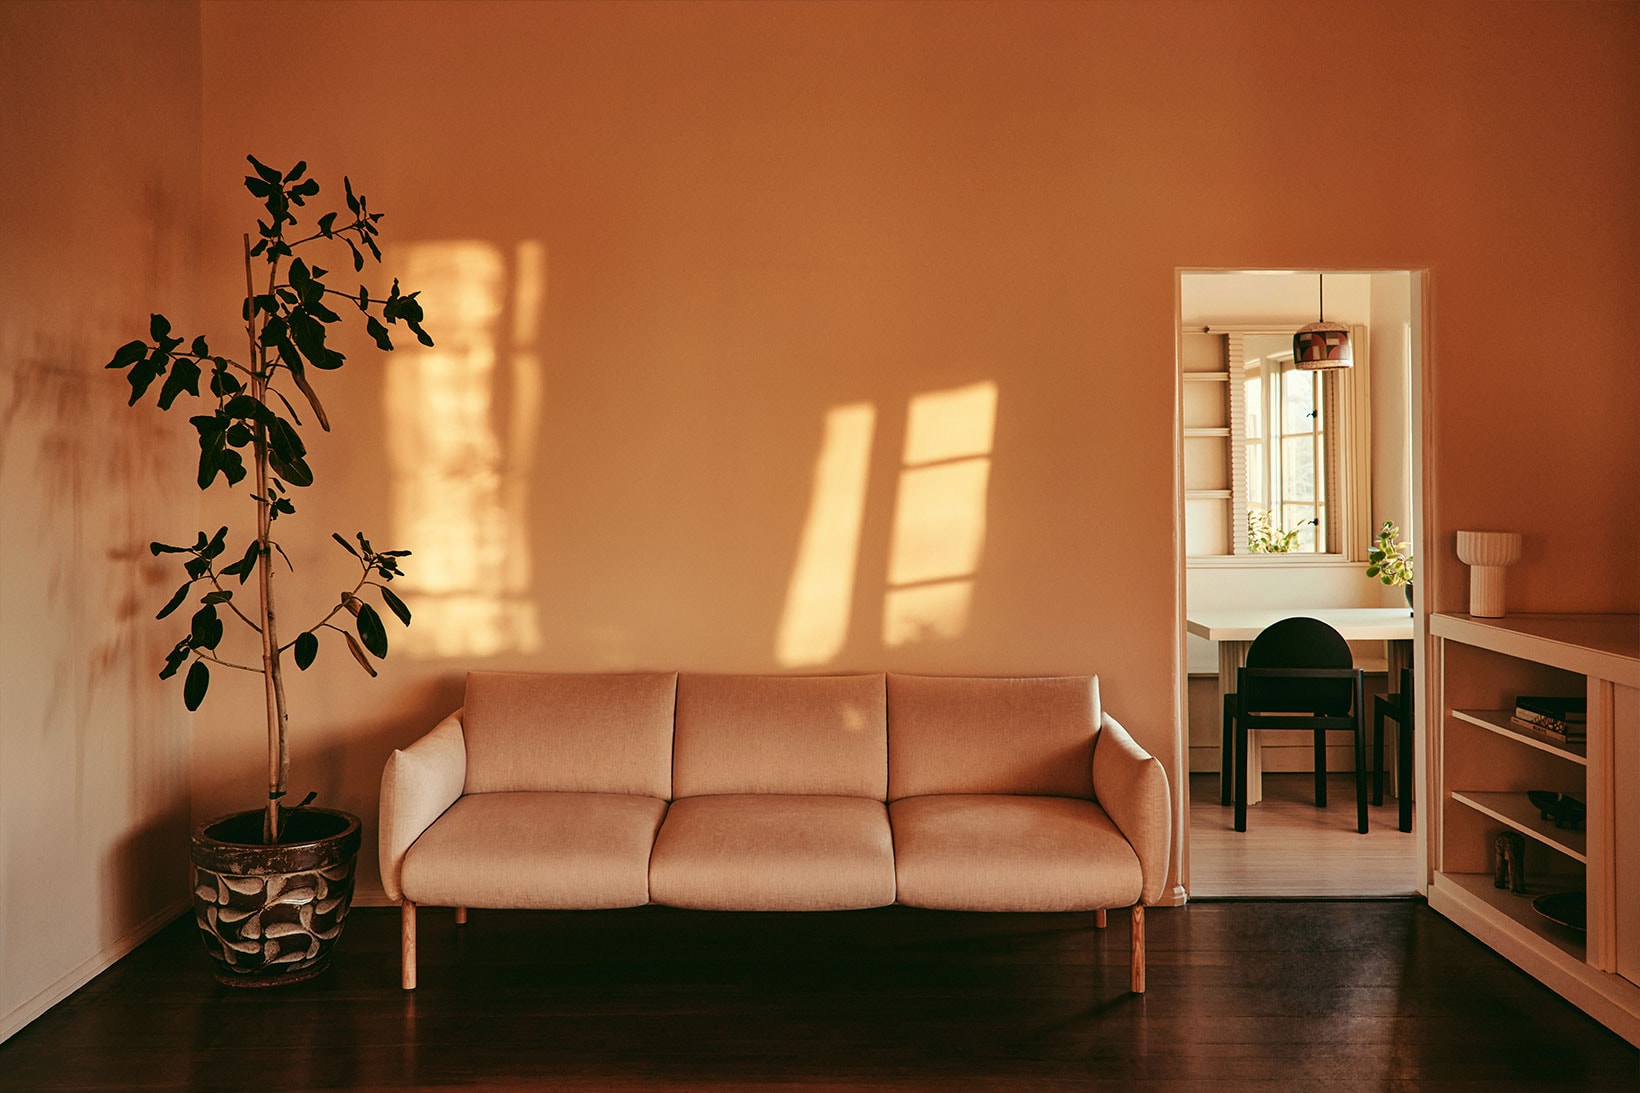 dims sofa couch furniture design alfa sunlight kitchen living room home interior